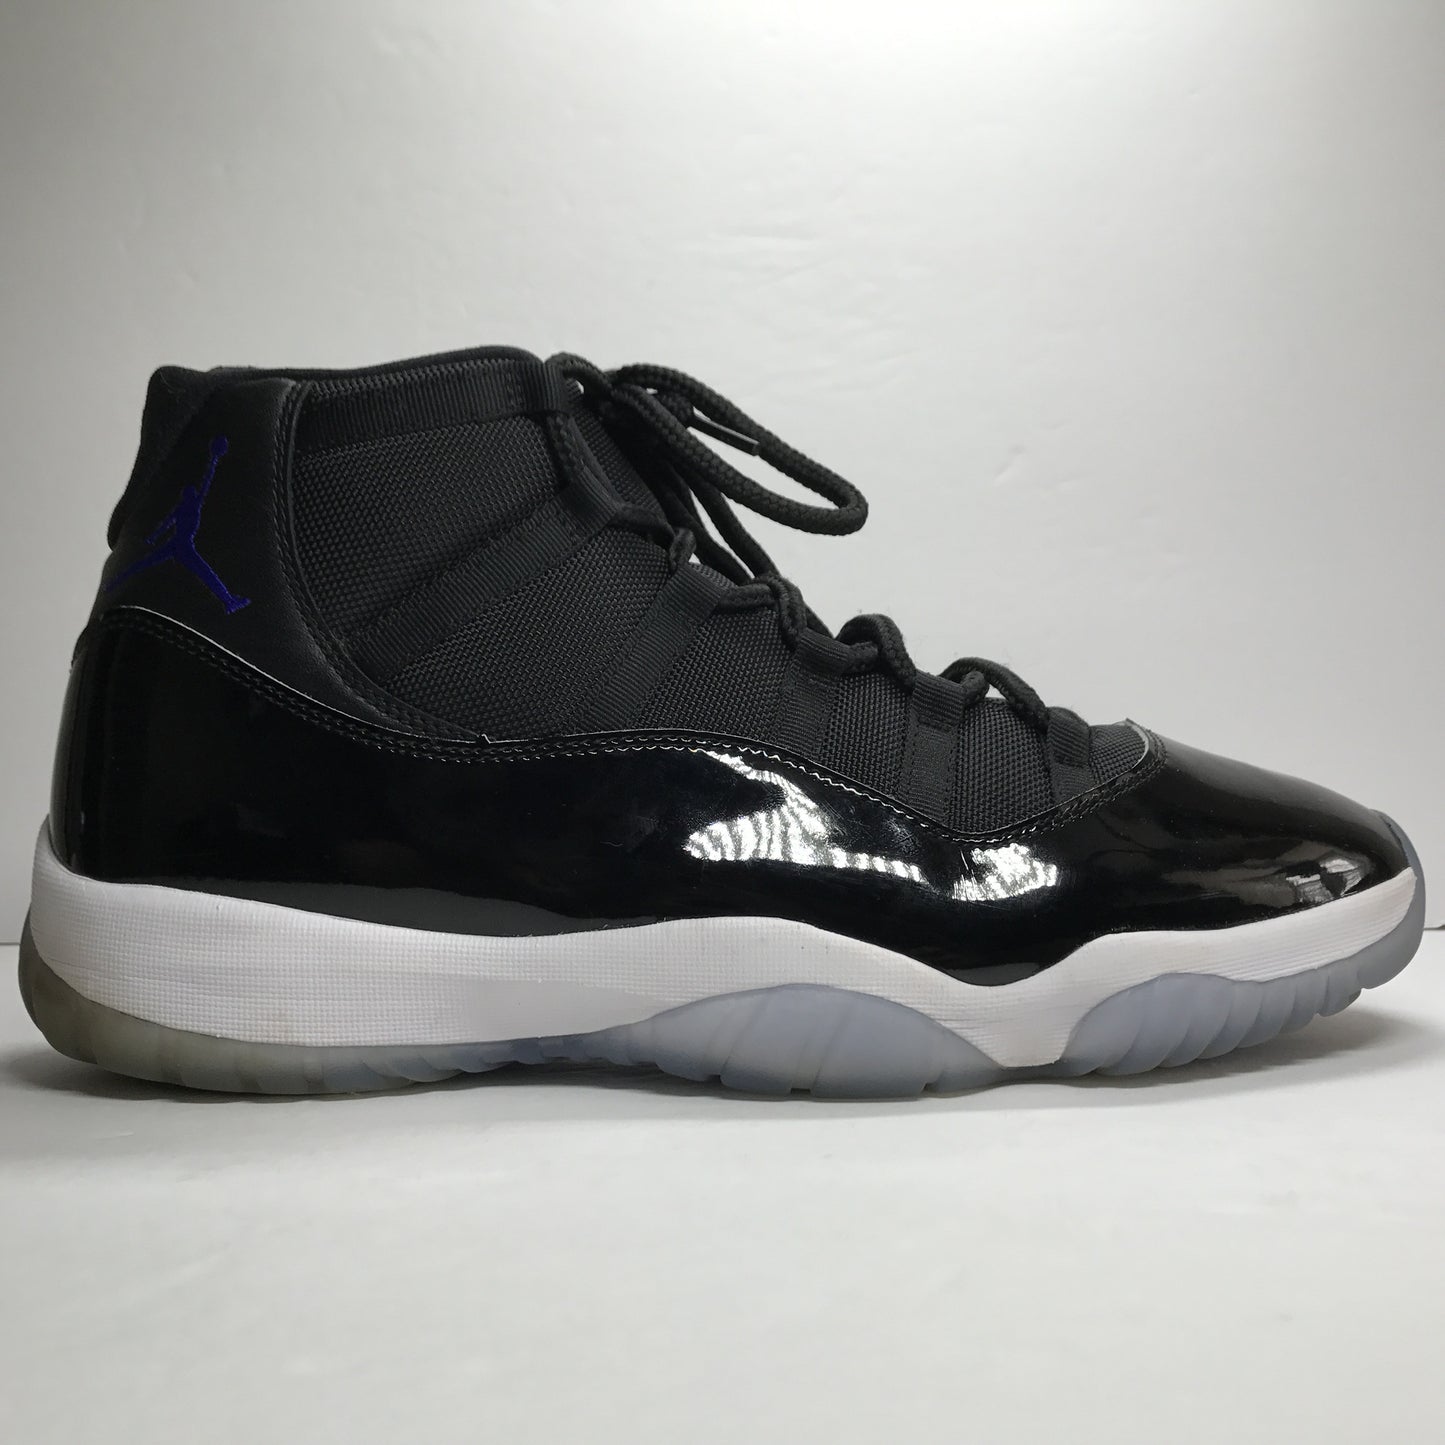 Nike Air Jordan 11 XI Retro Space Jam 2016 Size 14